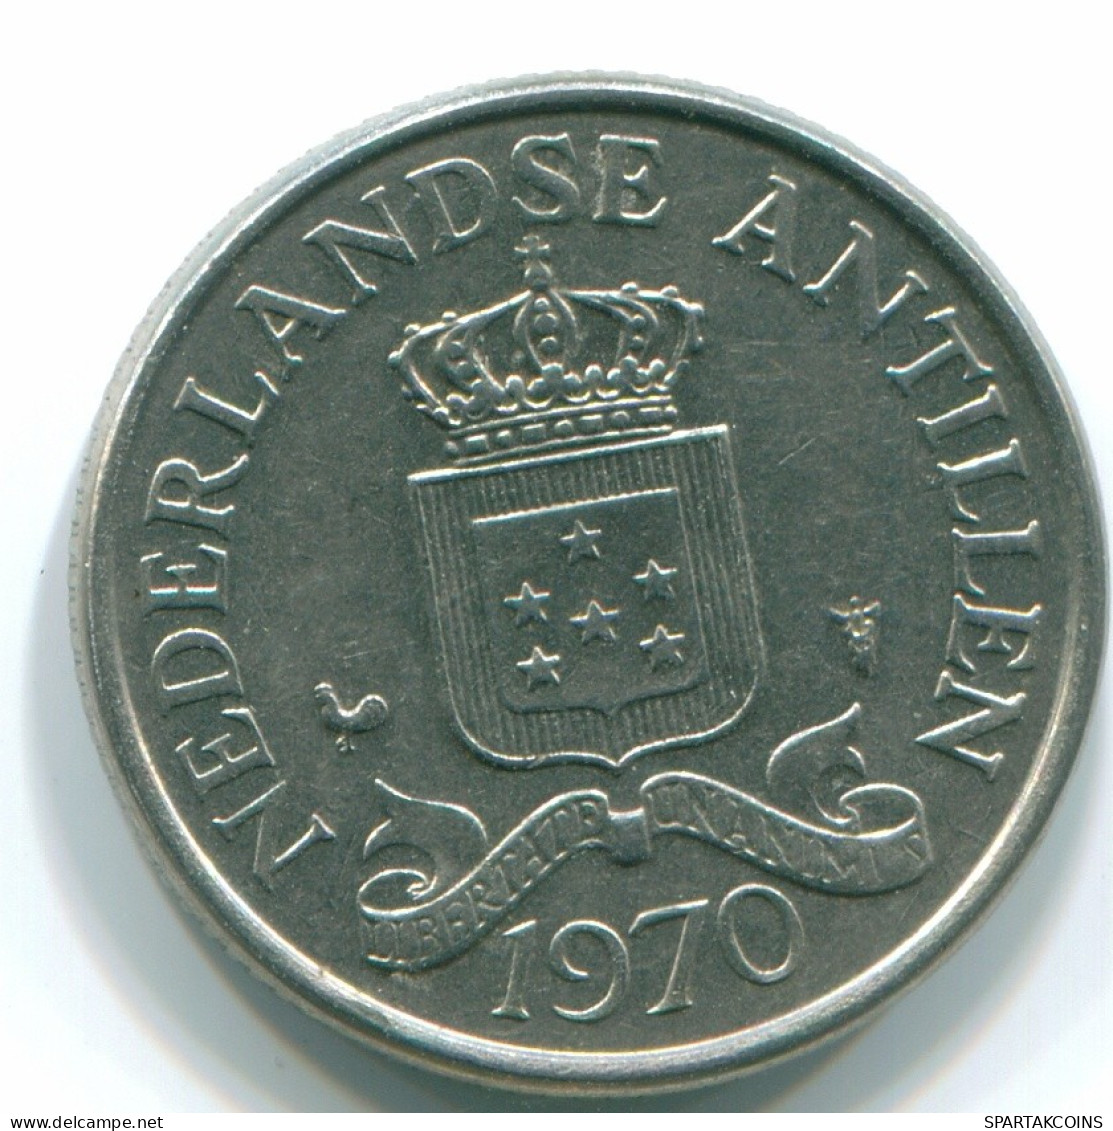 25 CENTS 1970 NIEDERLÄNDISCHE ANTILLEN Nickel Koloniale Münze #S11452.D.A - Netherlands Antilles